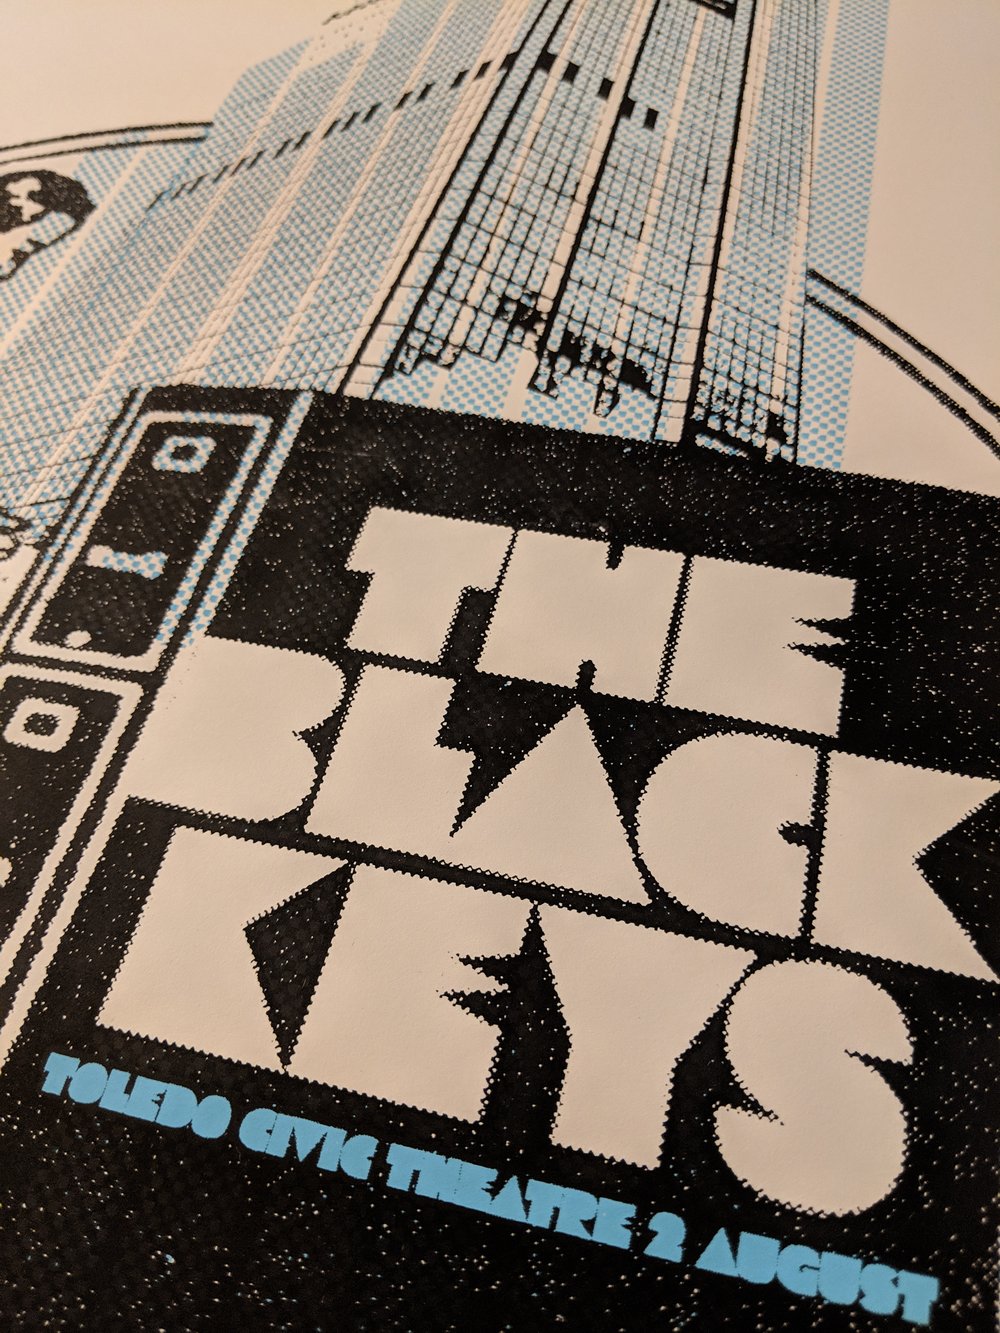 The Black Keys - Toledo, Ohio **RARE FIND** Extra big